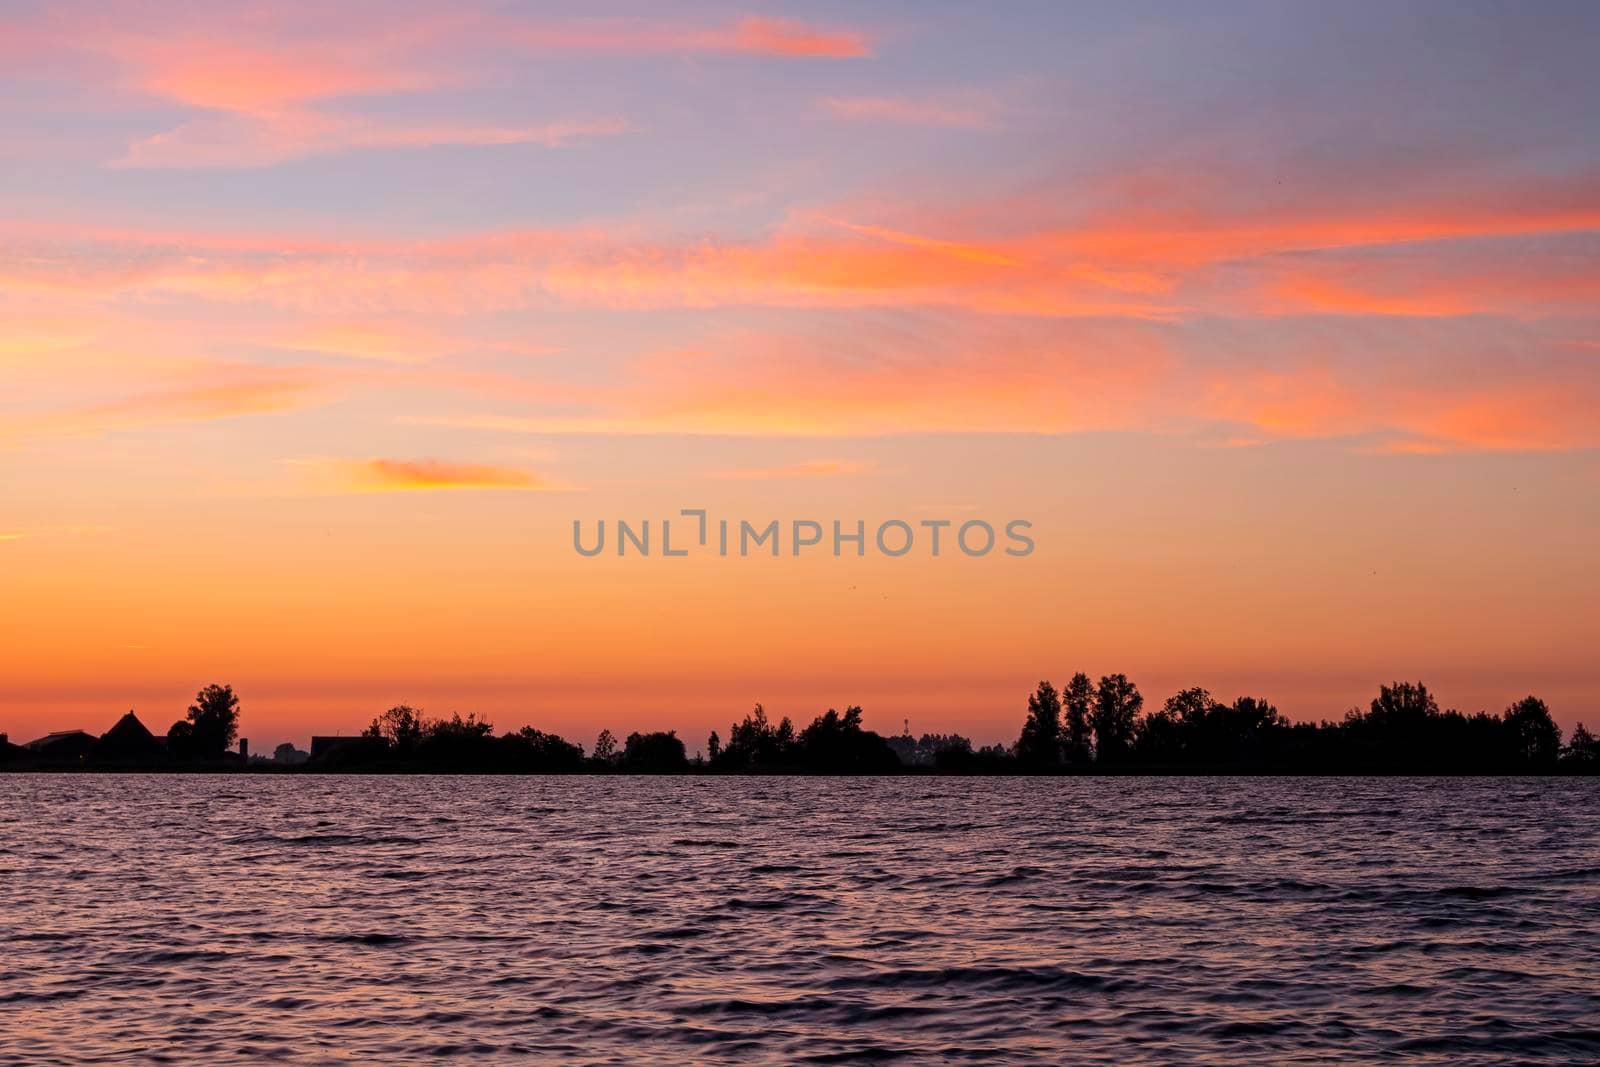 Sunset at the Sneekermeer in Friesland the Netherlands by devy